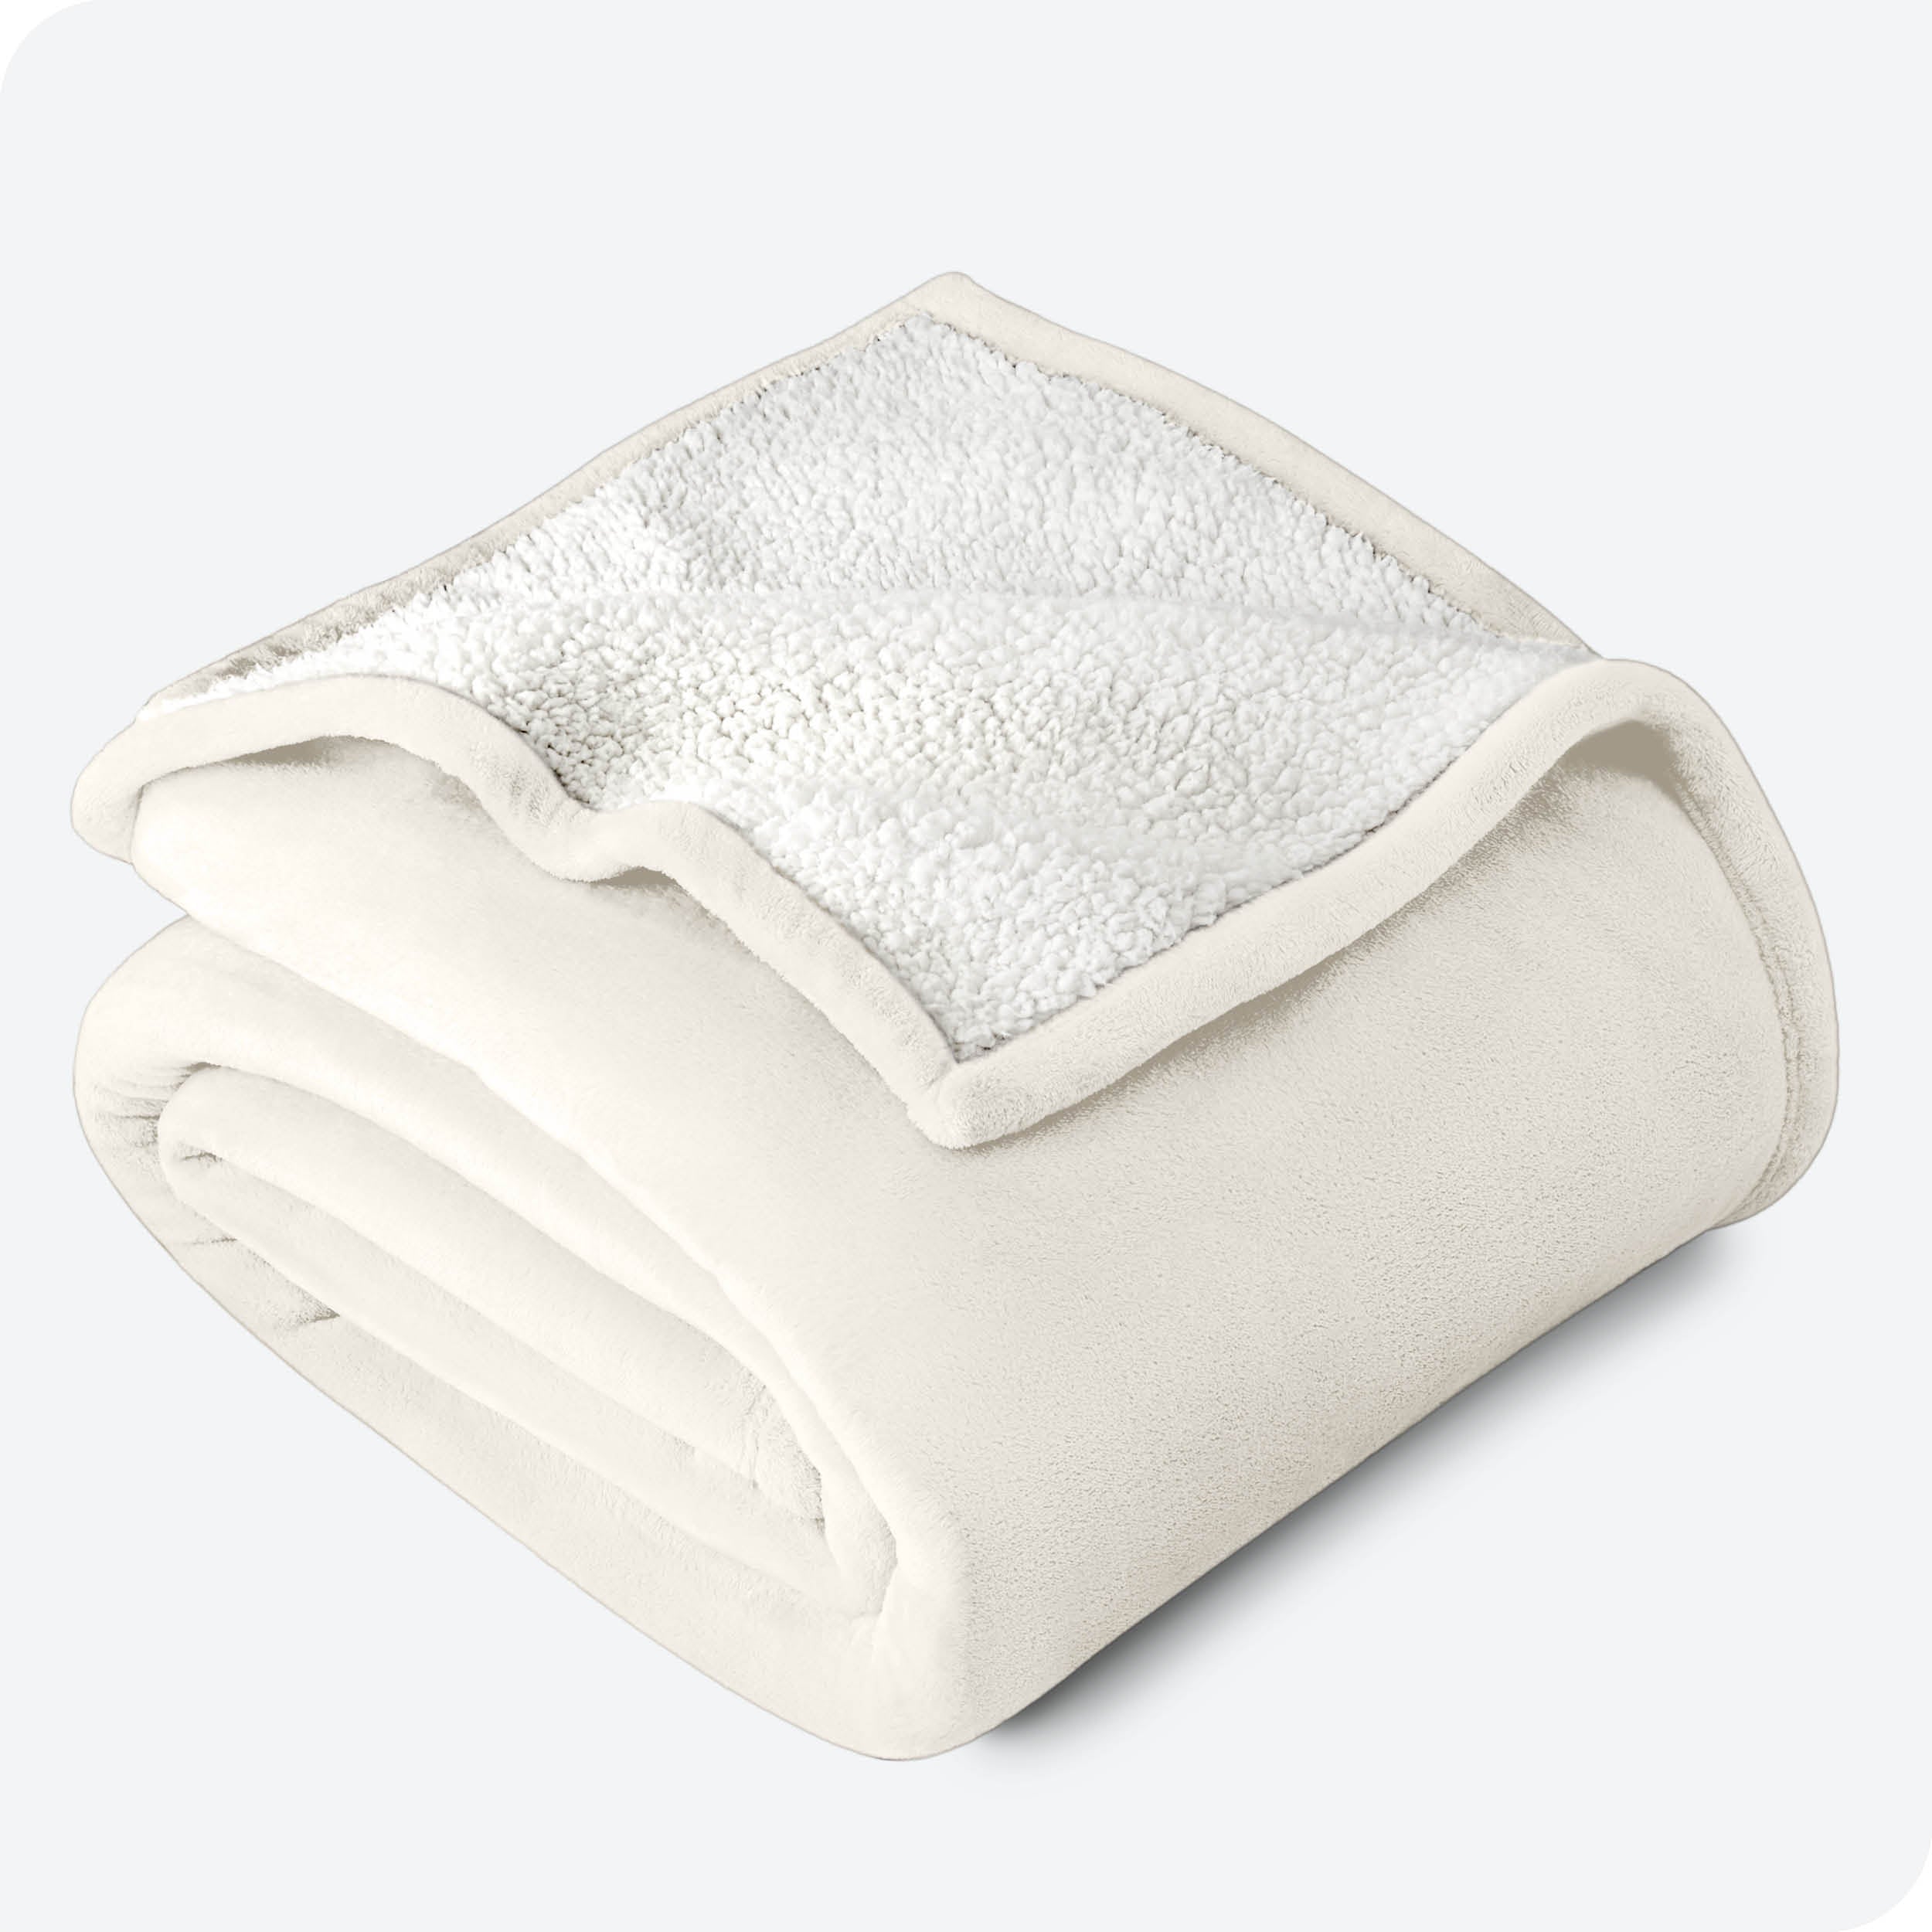 Cream Sherpa Blanket folded